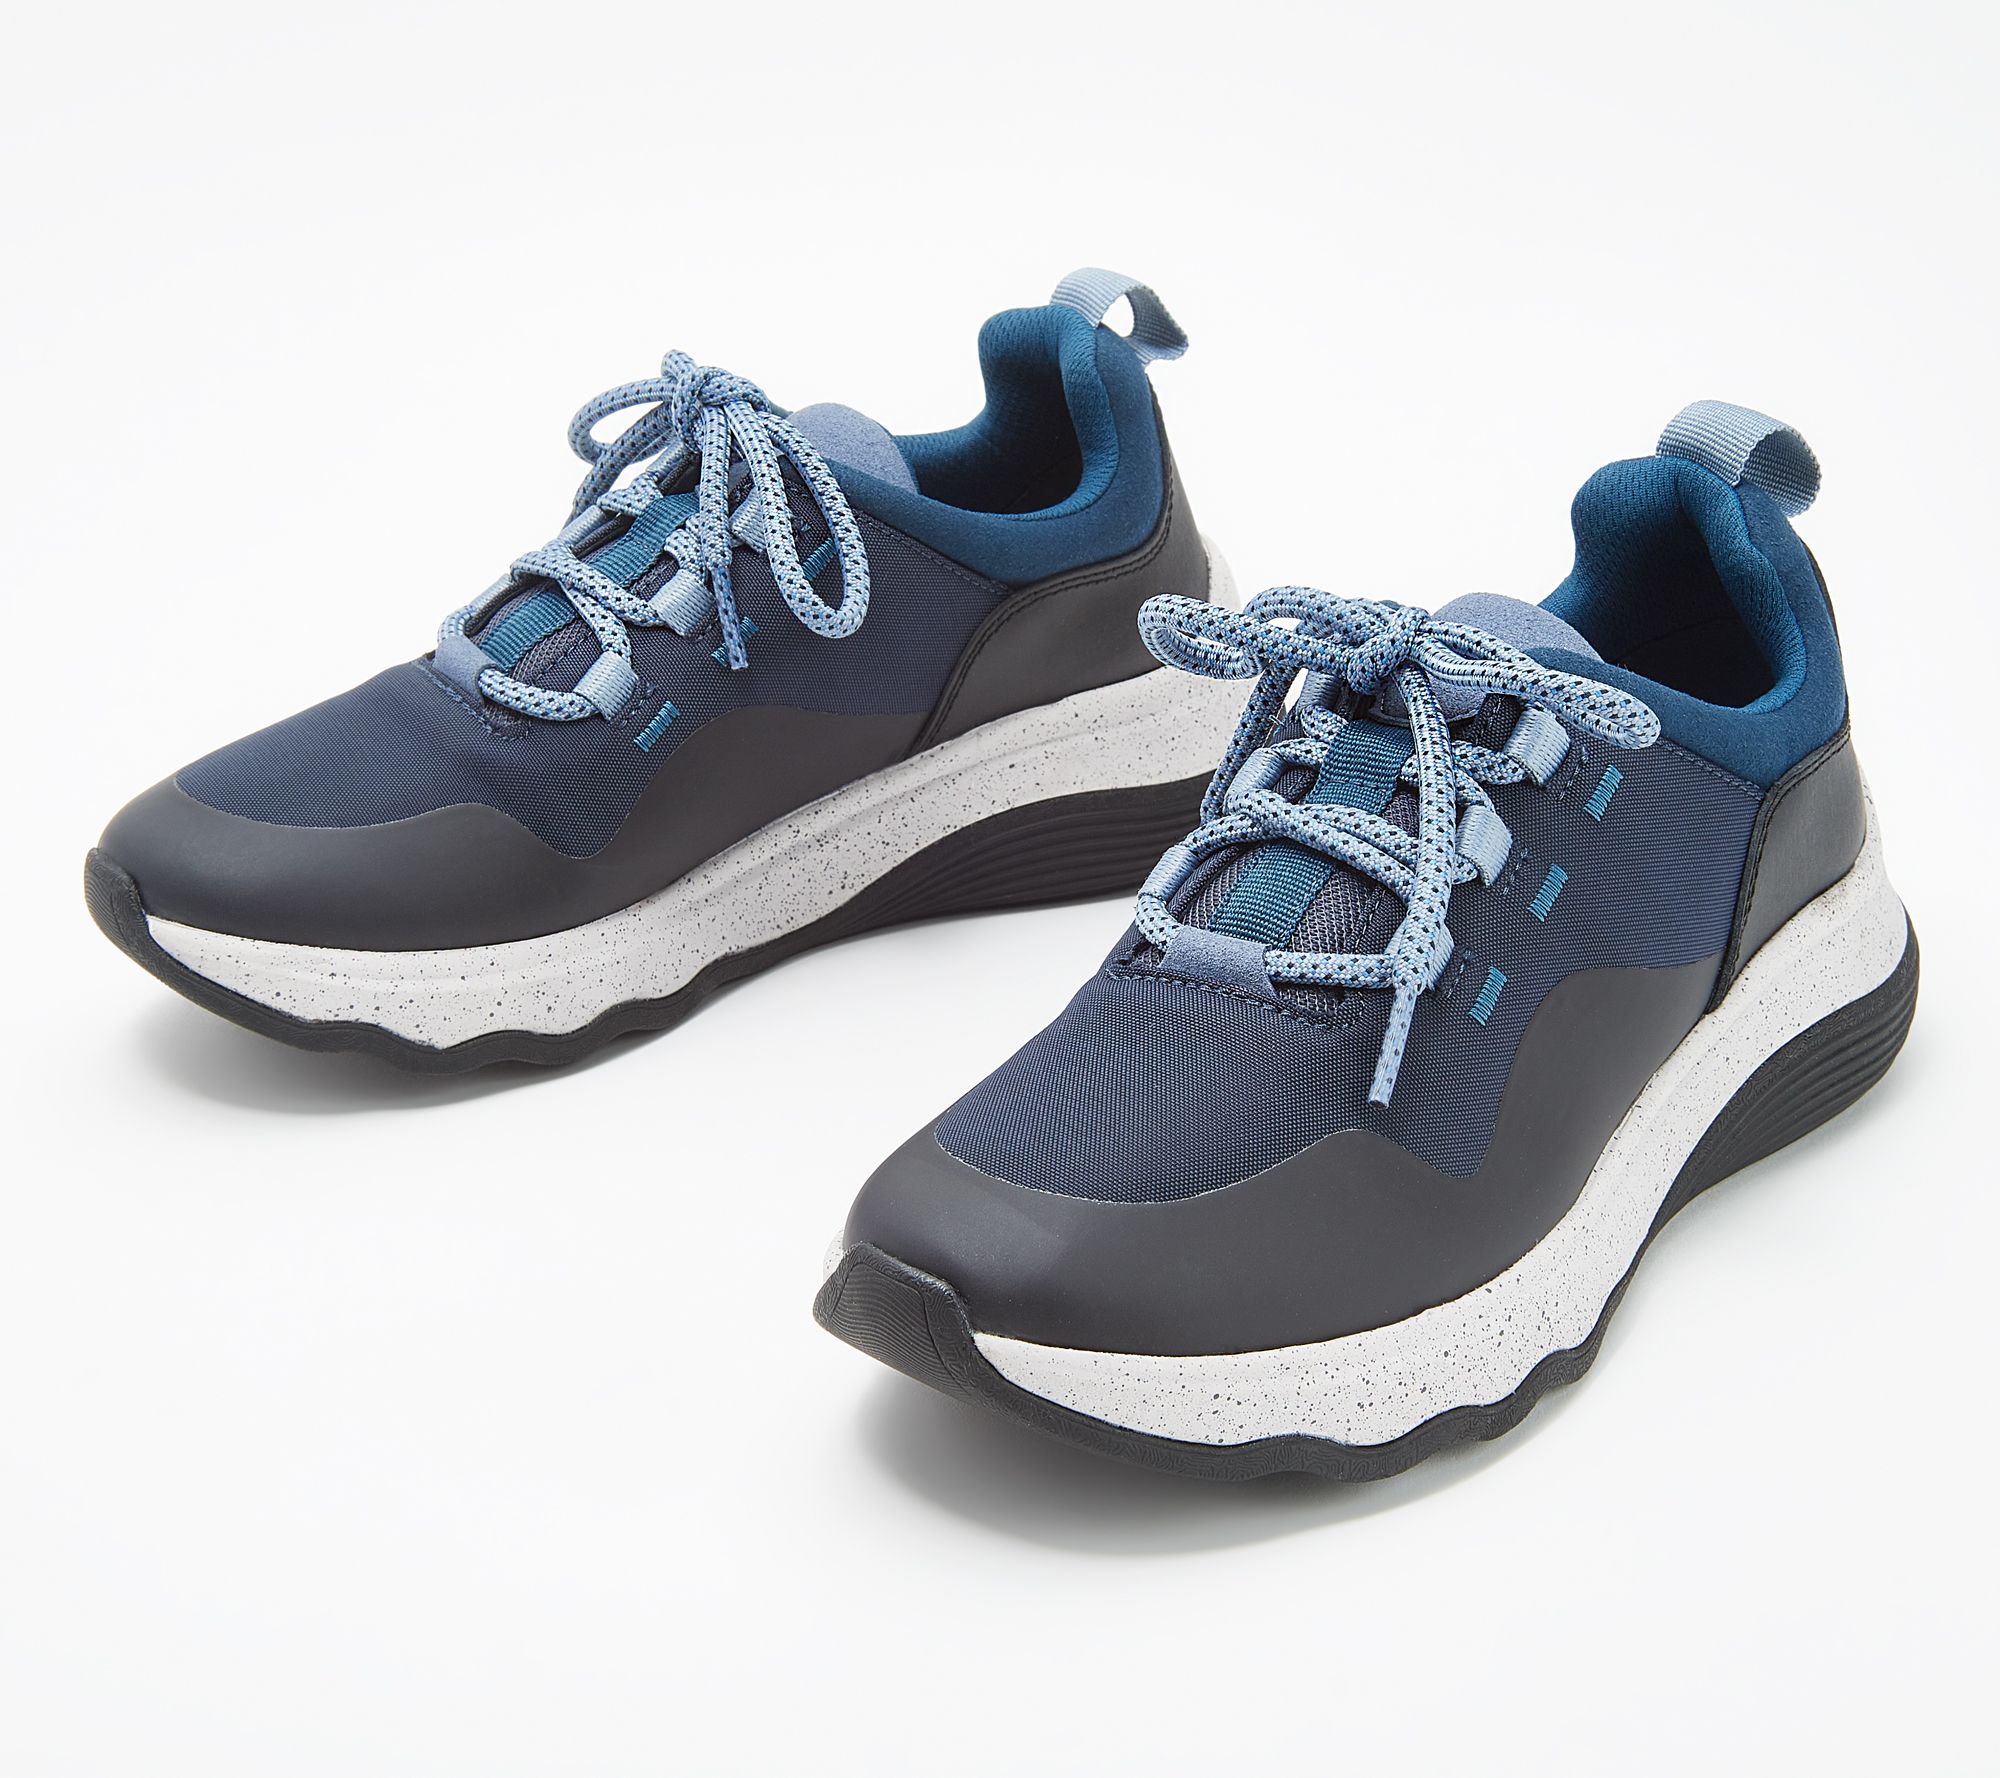 Clarks Collection Water Resistant Walking Shoes - Jaunt Lace - QVC.com